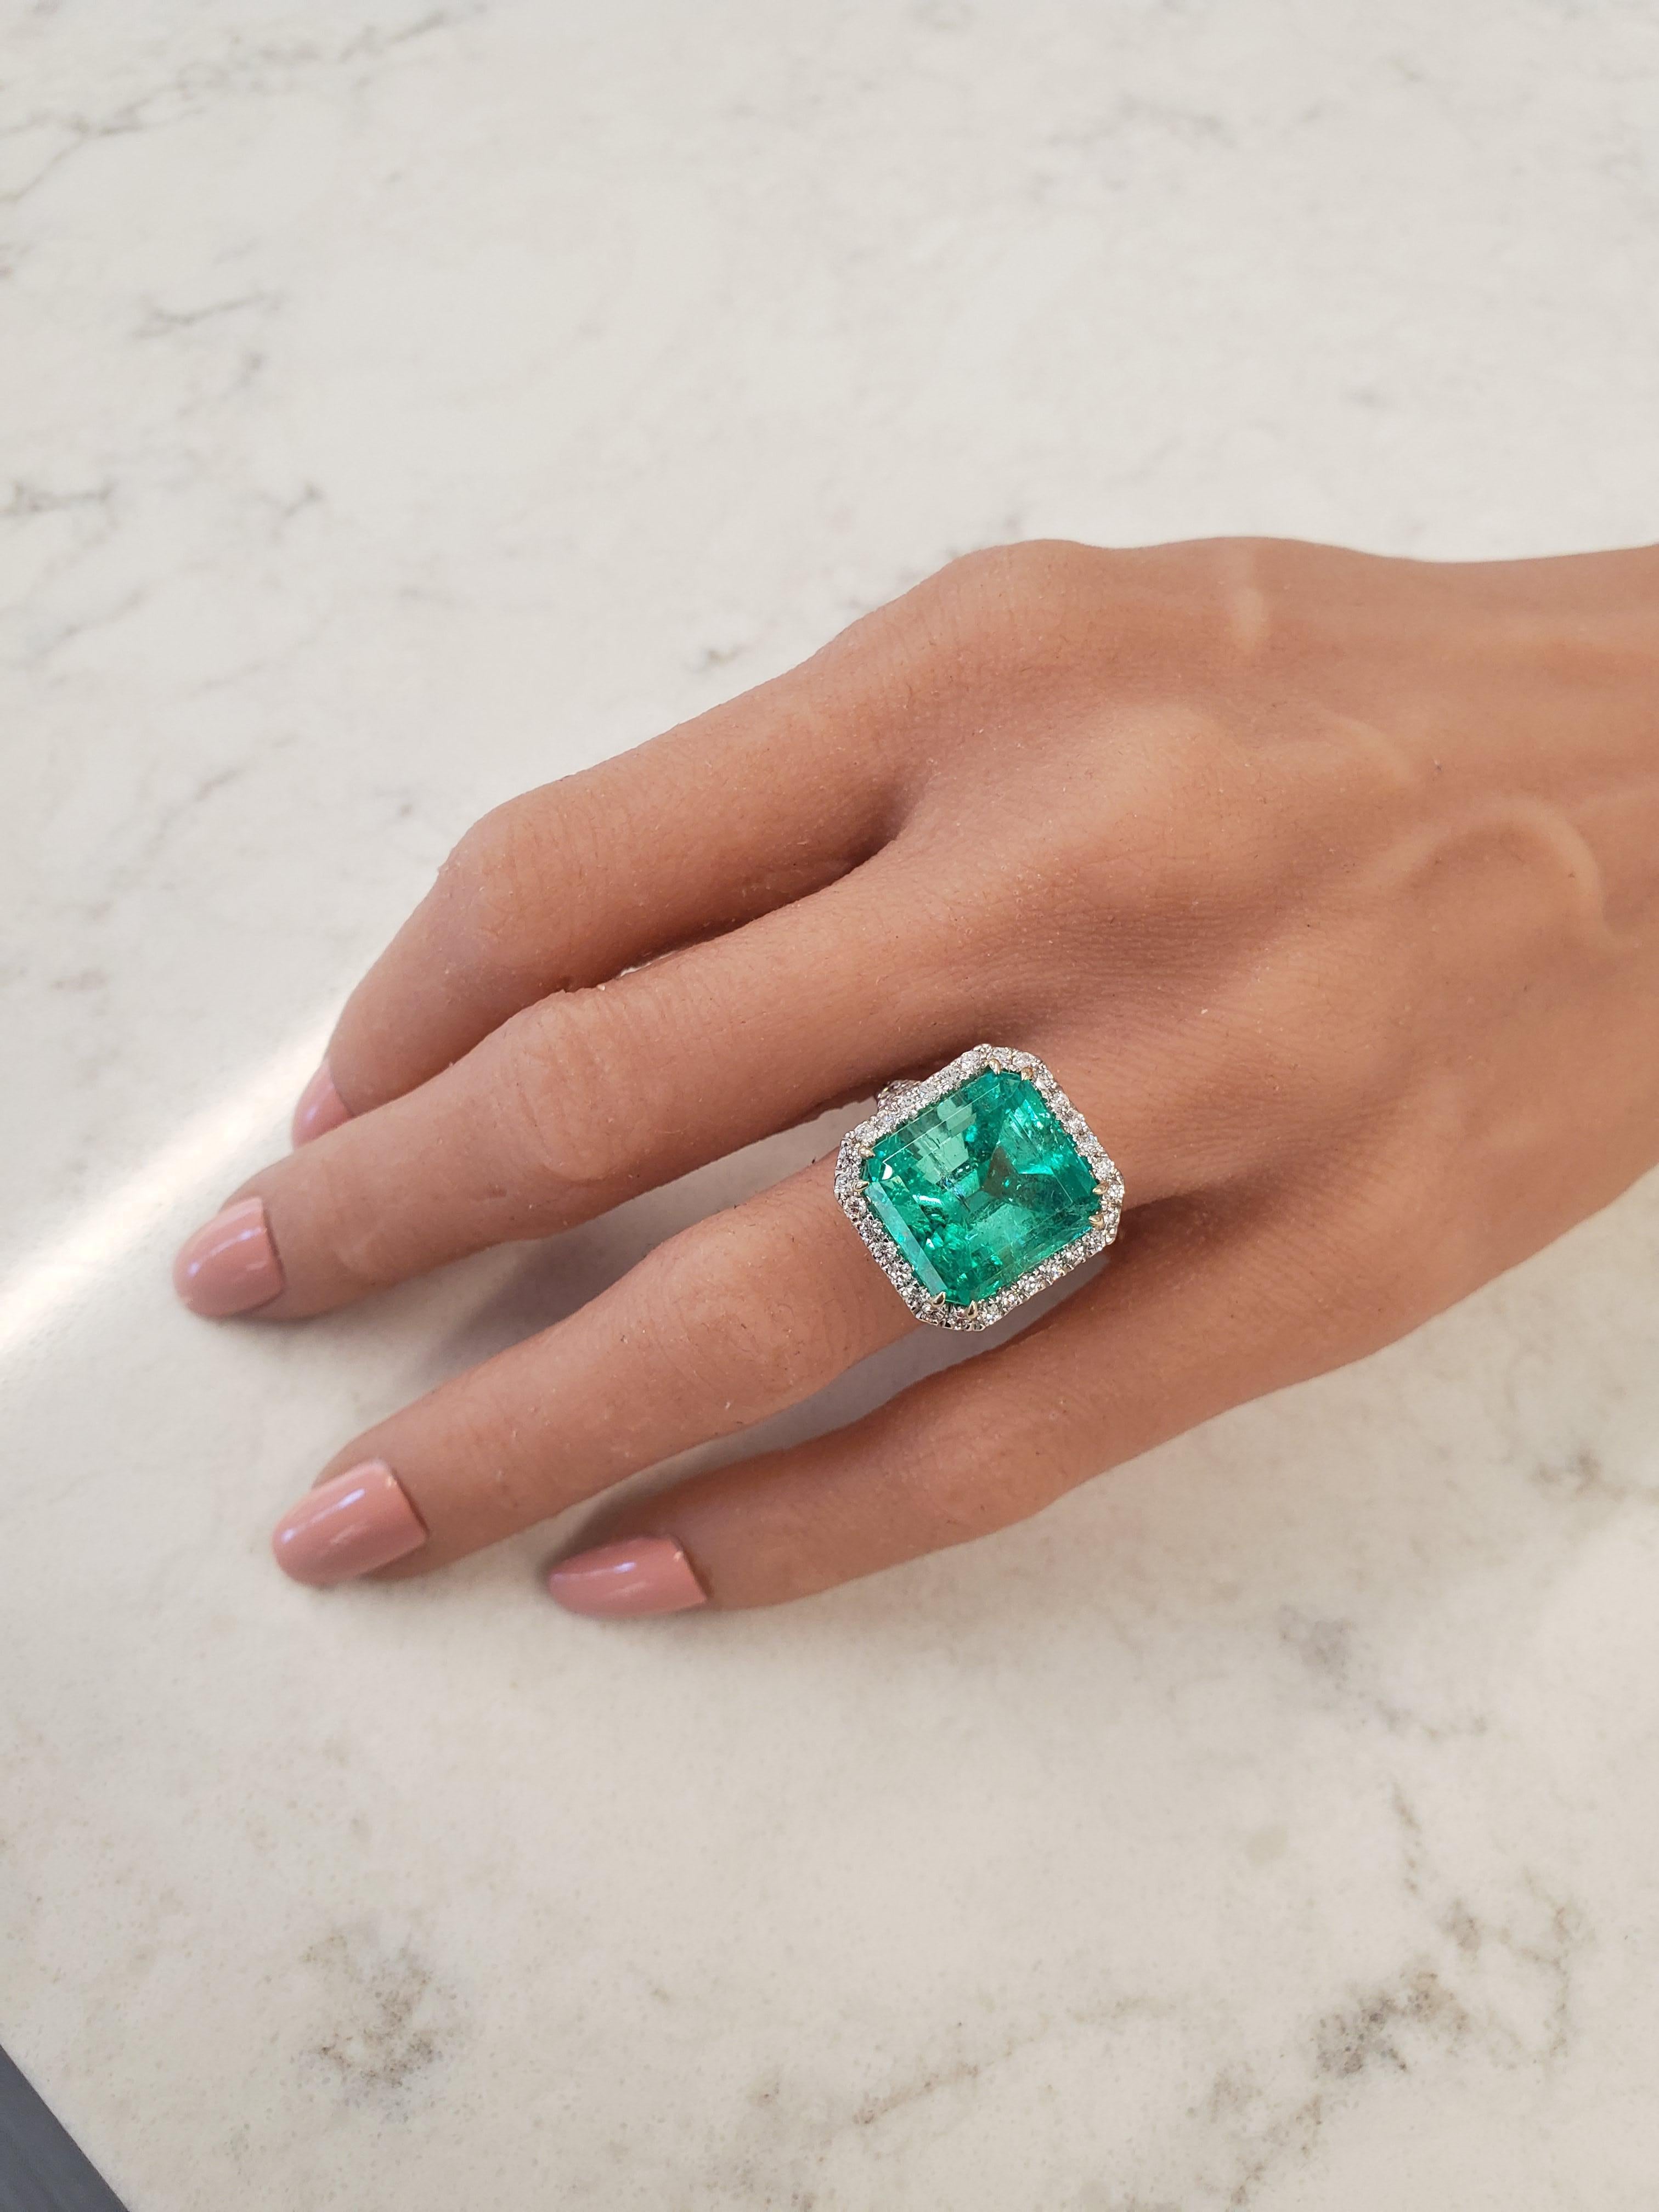 Women's PGS Certified 13.06 Carat Colombian Emerald Cut Emerald and Diamond 18K Ring